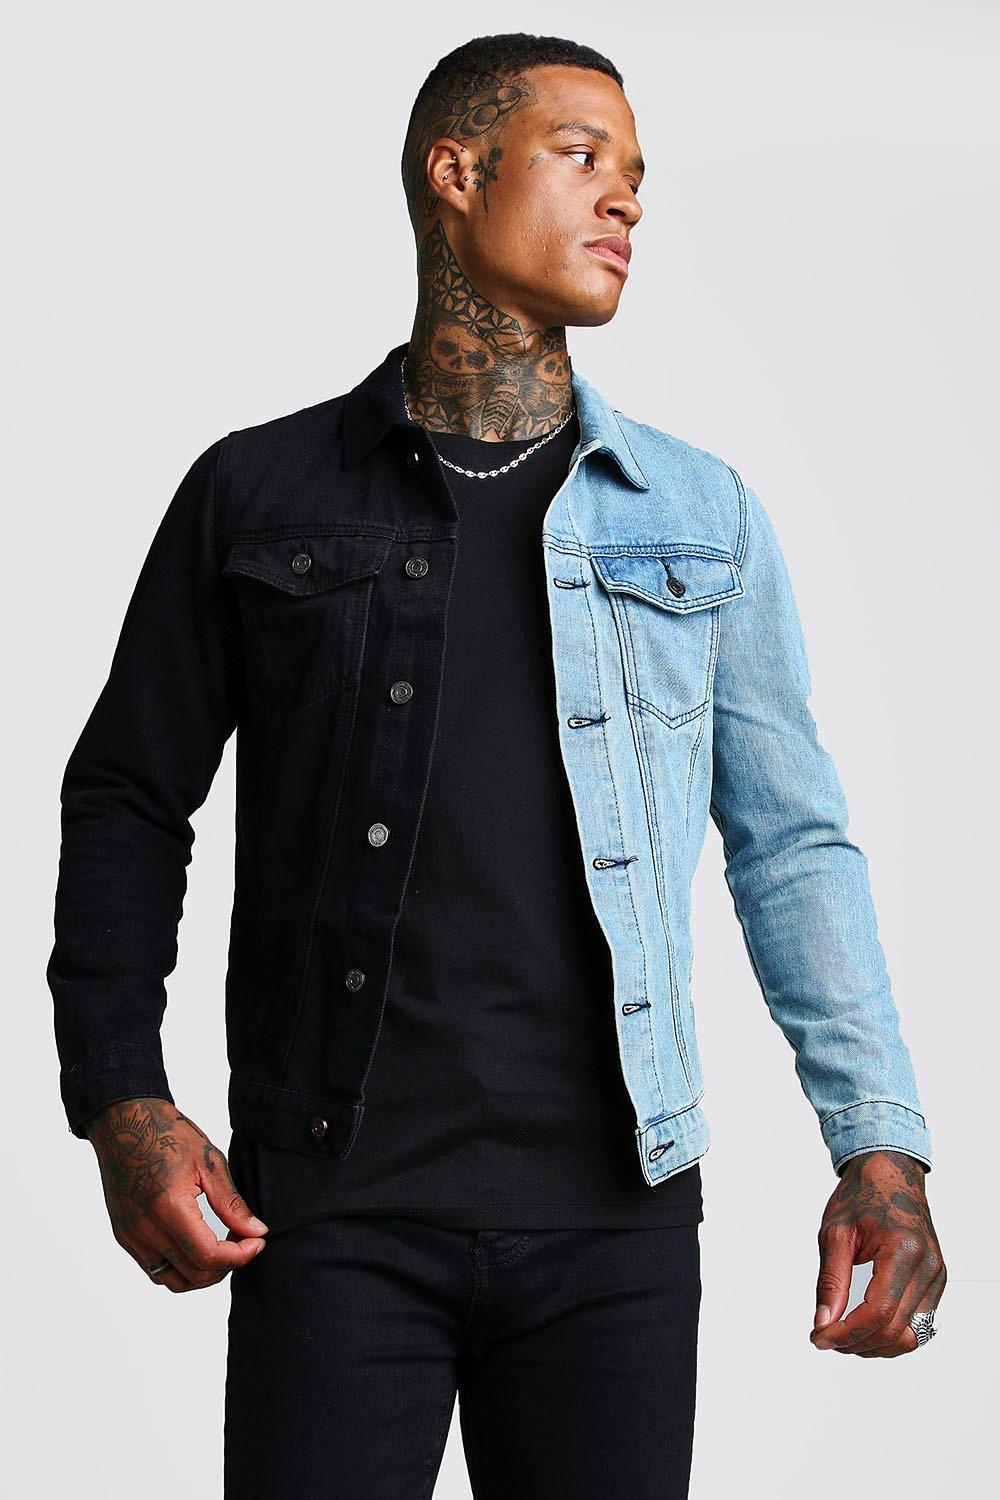 black and blue jean jacket